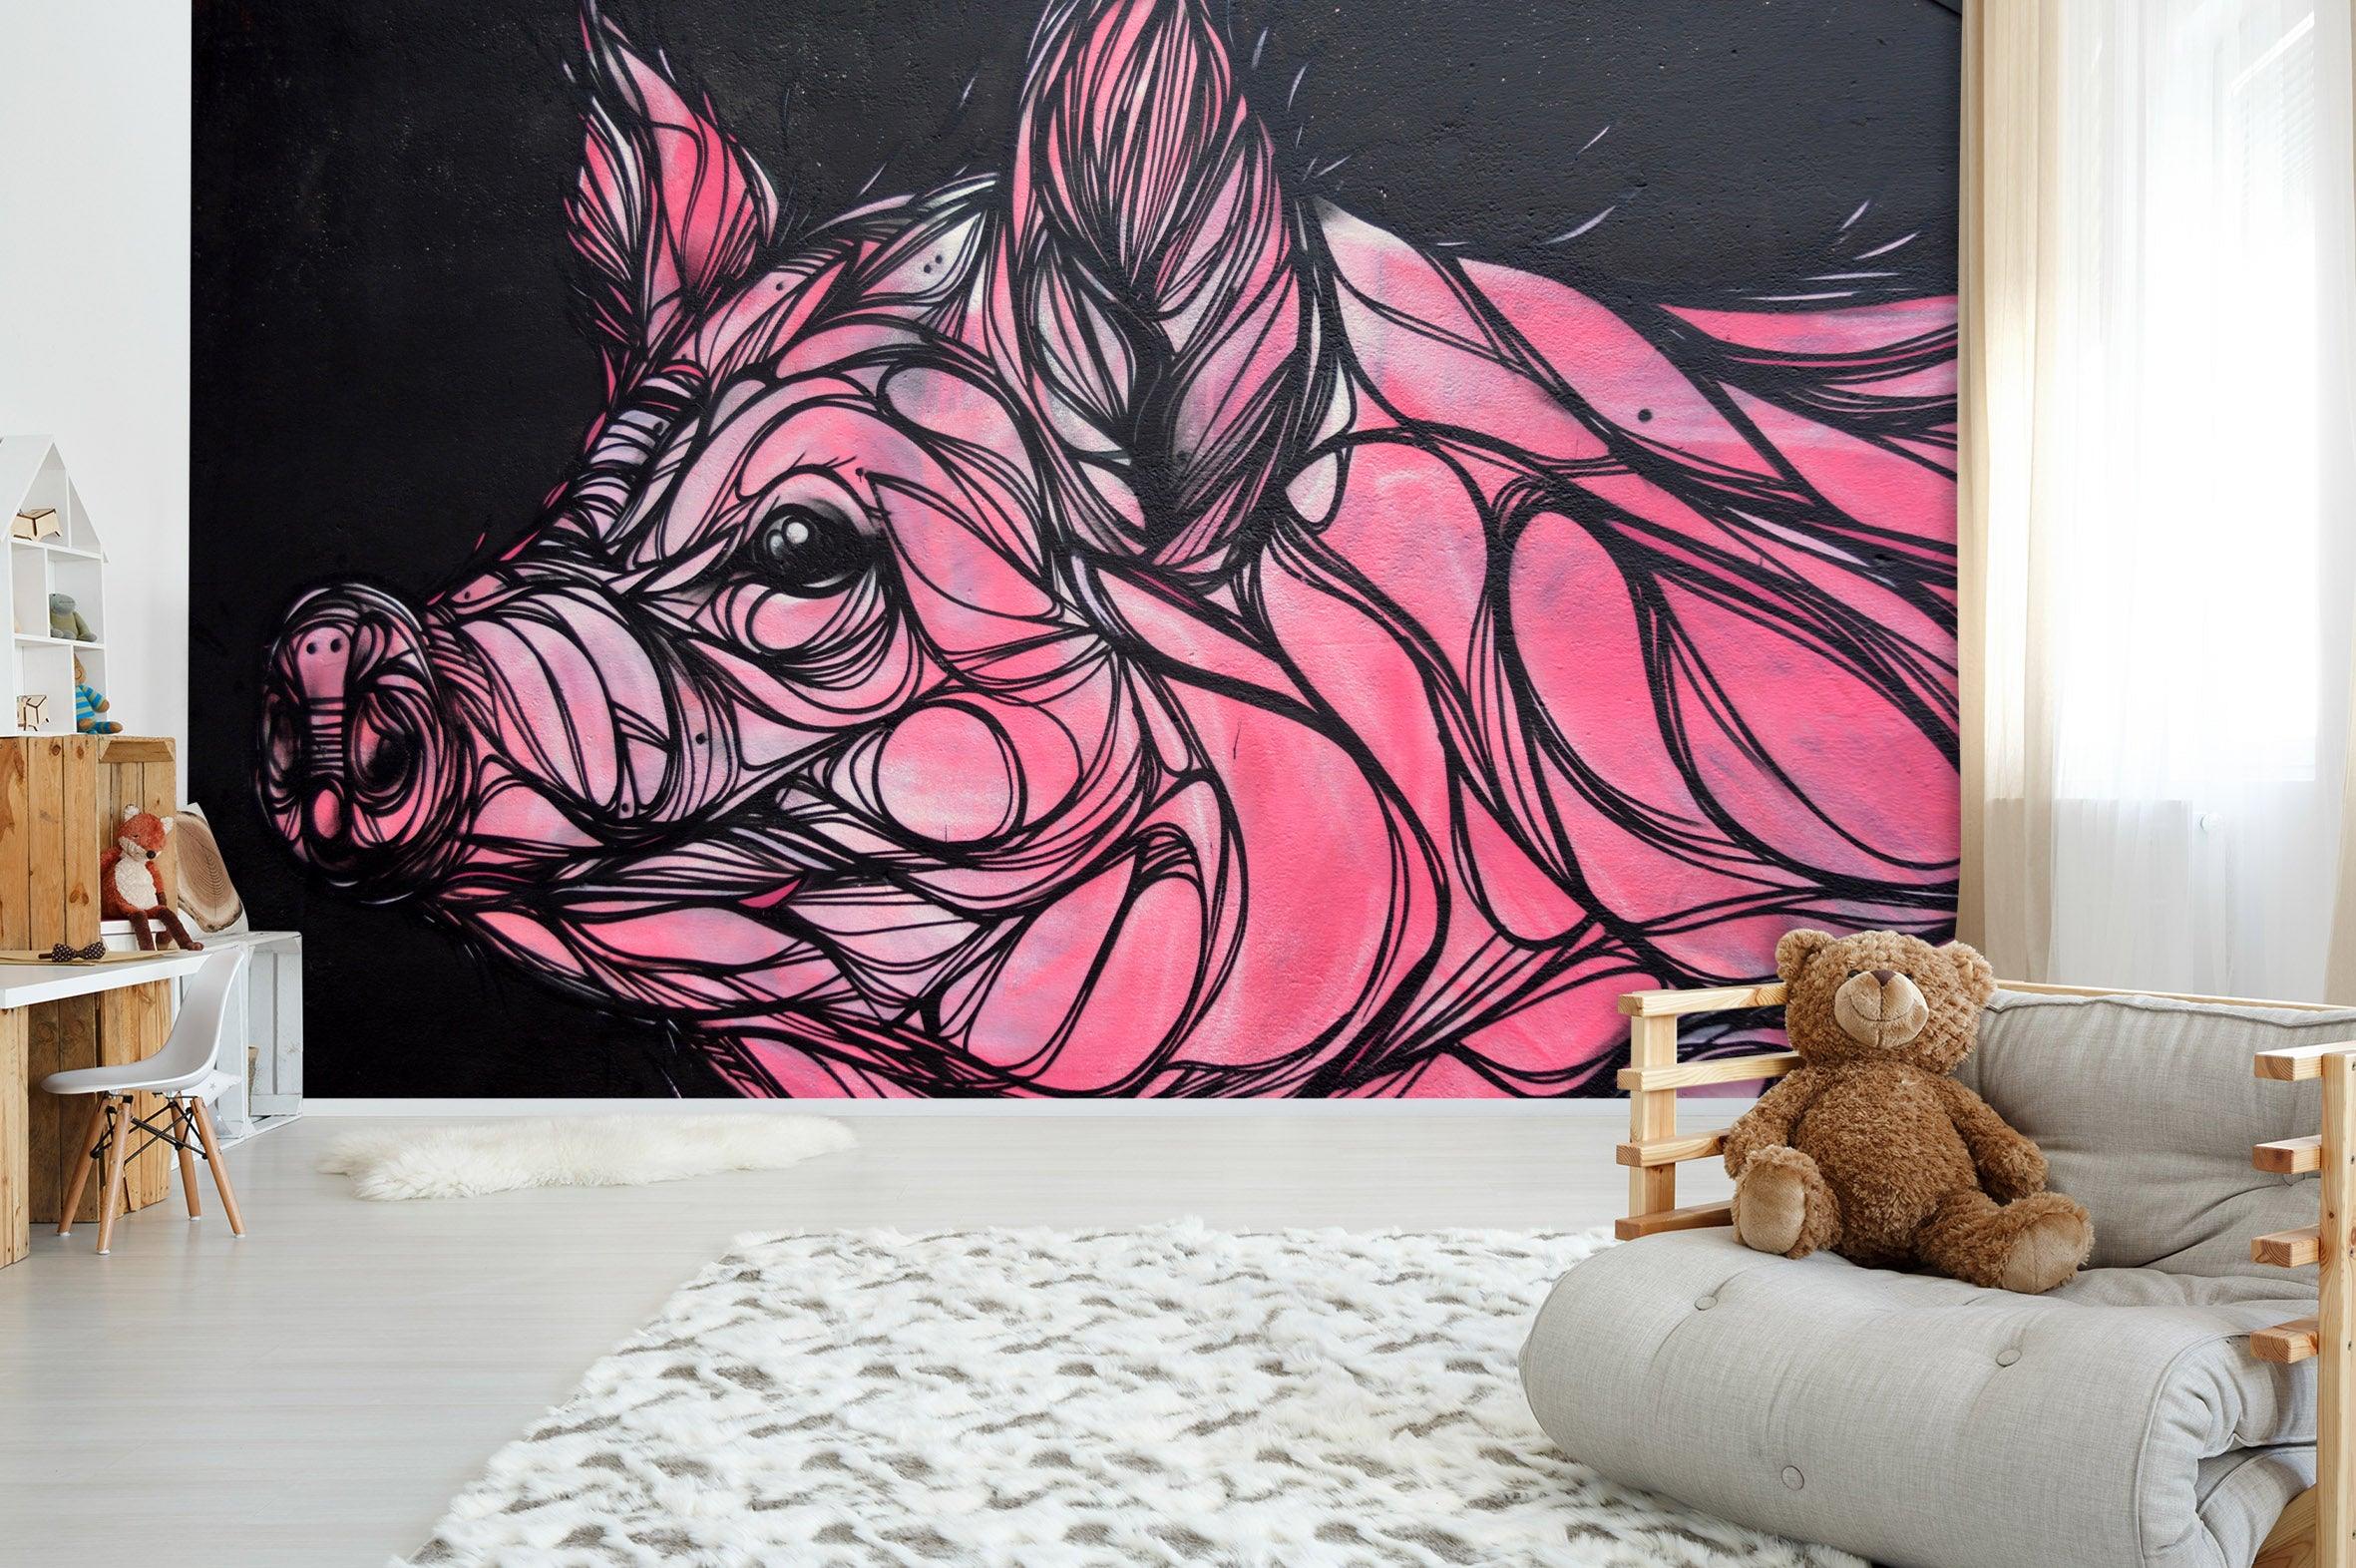 3D Pink Line Draw Pig Wall Mural Wallpaper B101- Jess Art Decoration